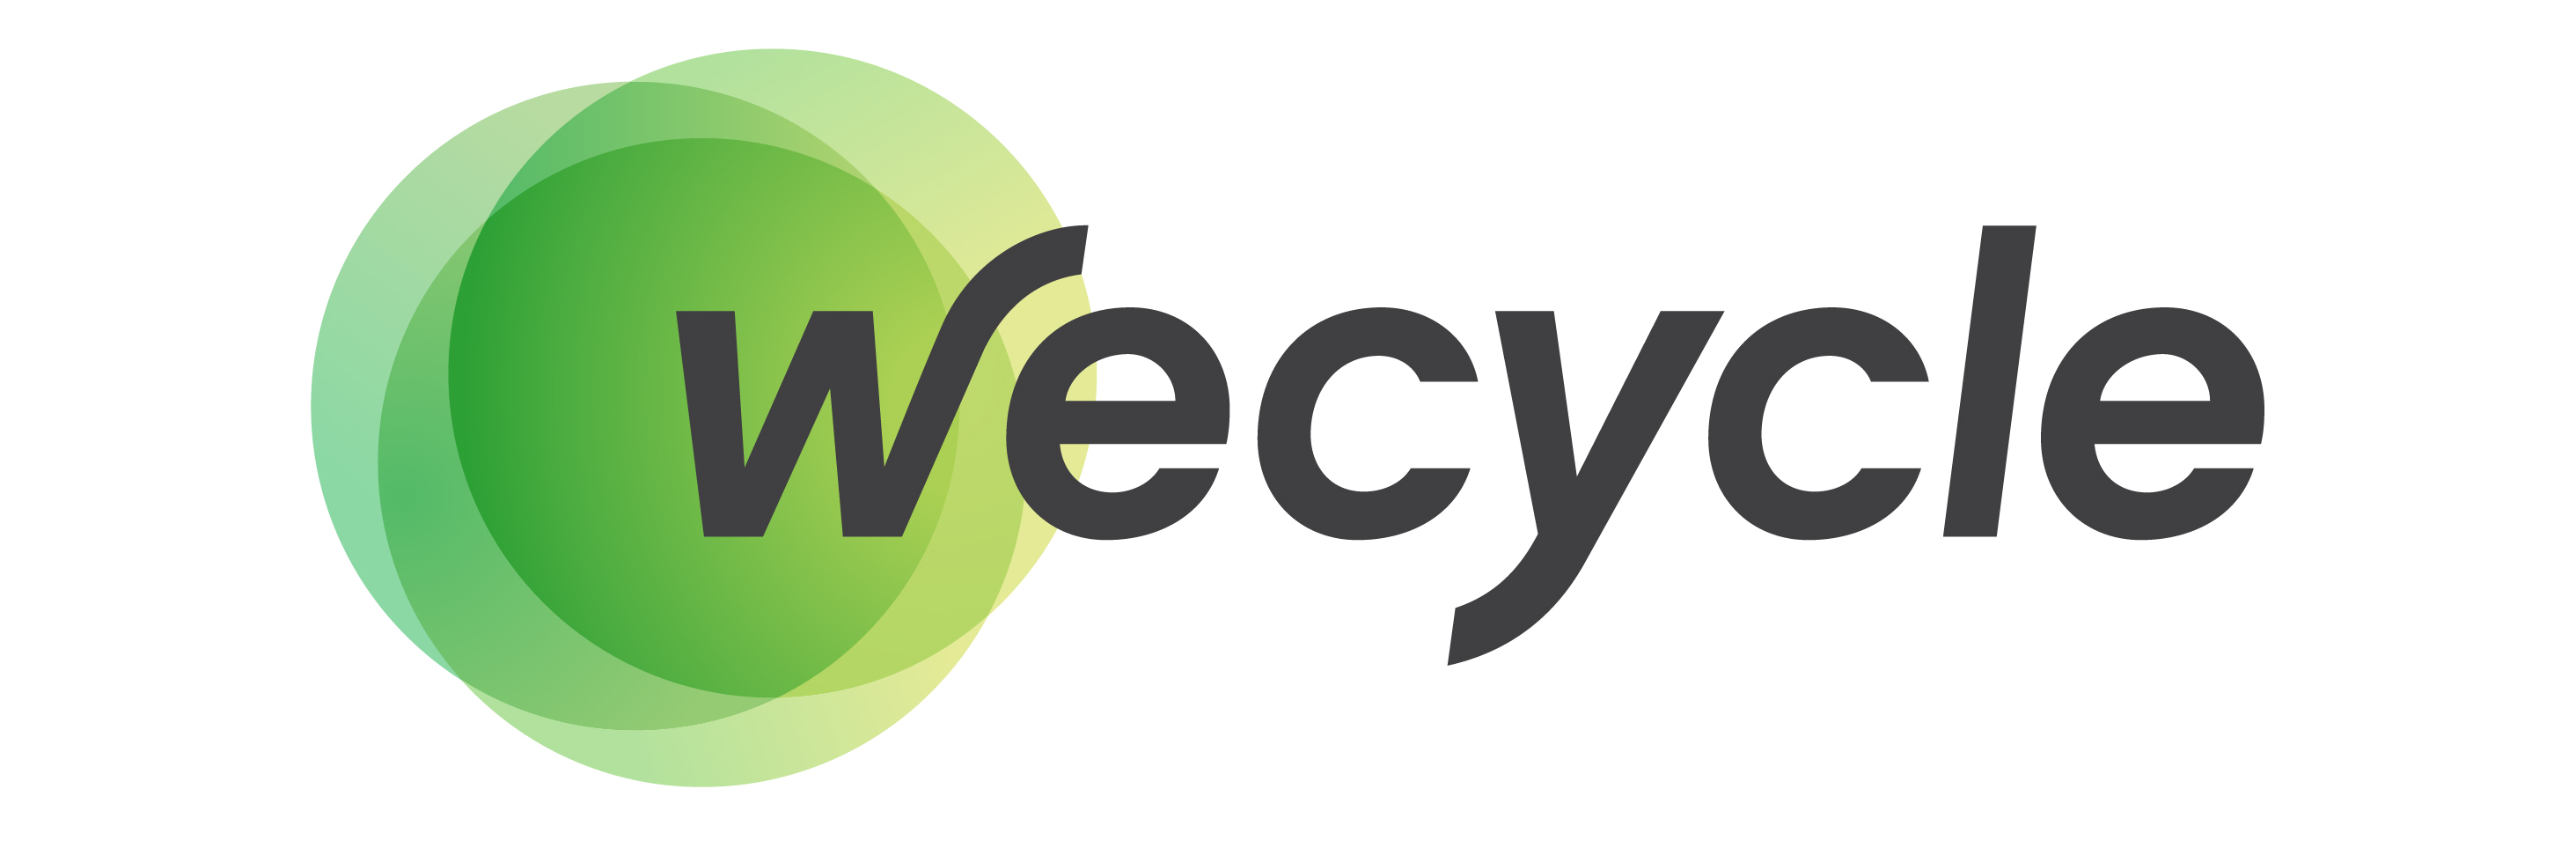 logo-wecycle-300dpi.jpg